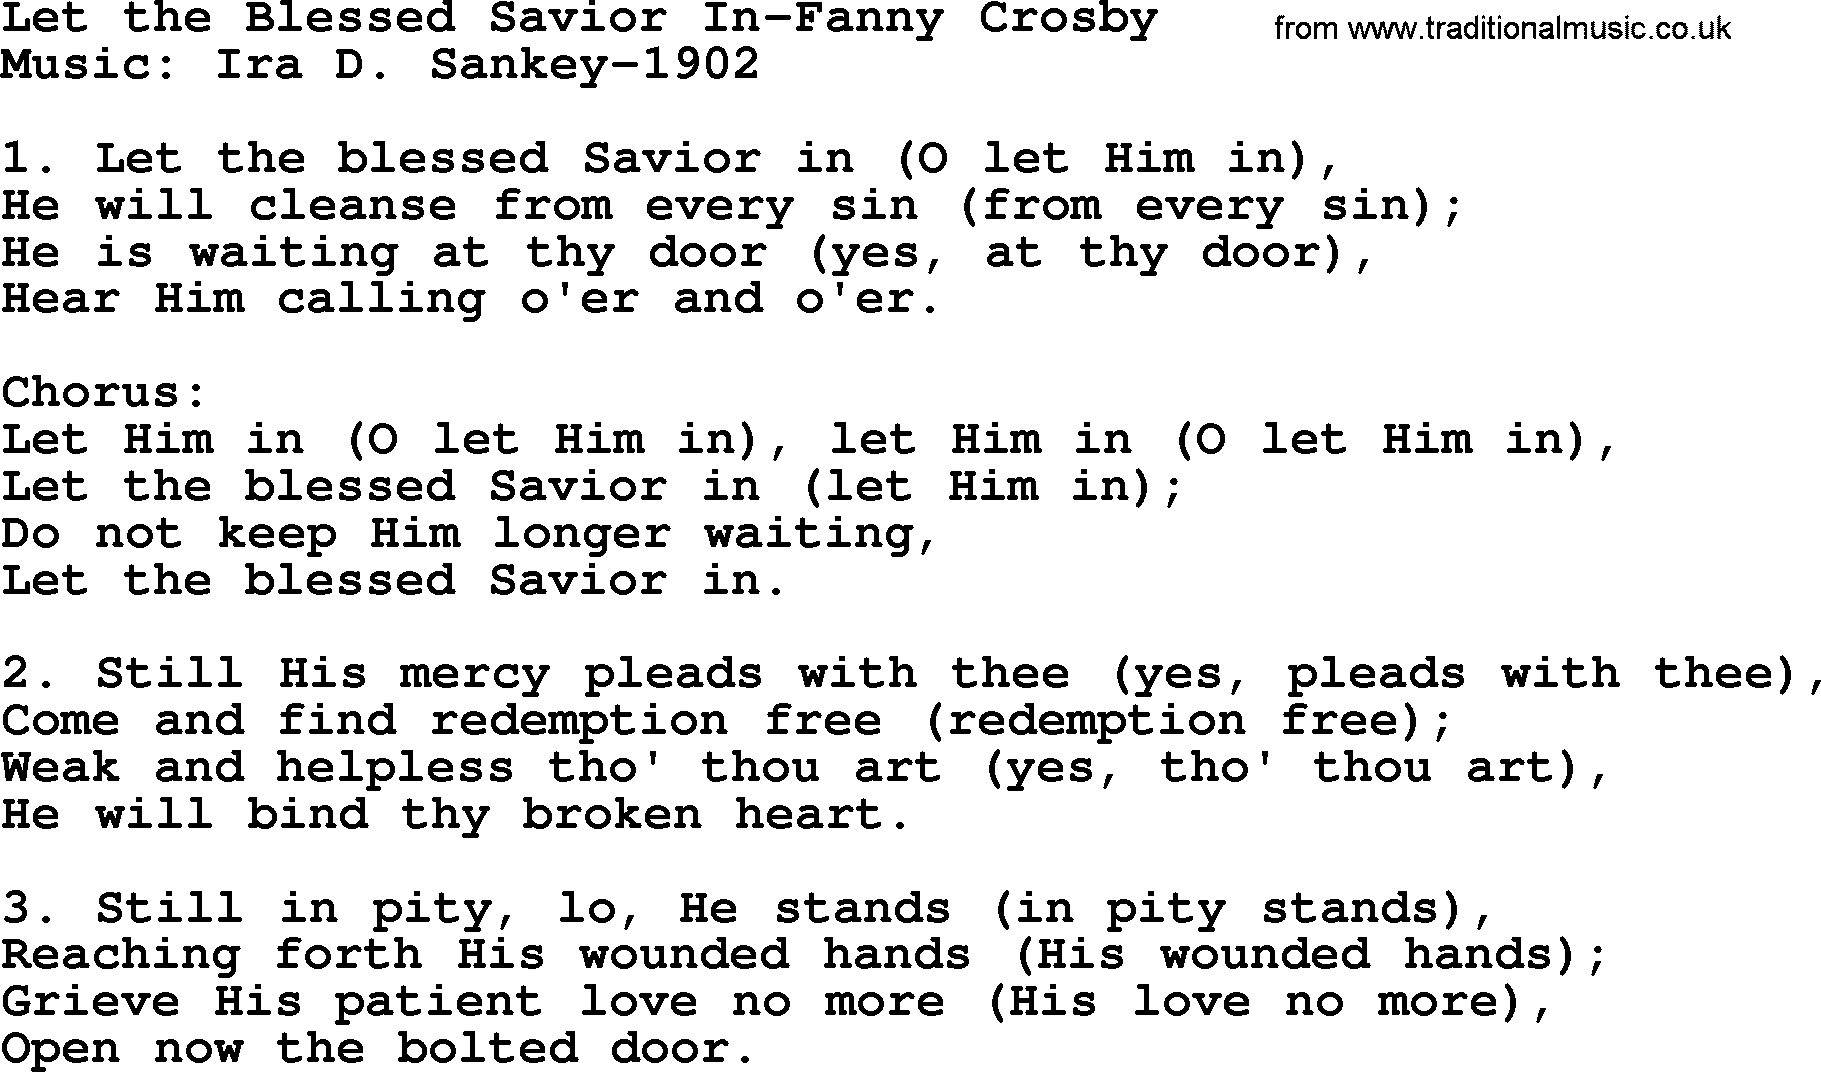 Ira Sankey hymn: Let the Blessed Savior In-Fanny Crosby-Ira Sankey, lyrics